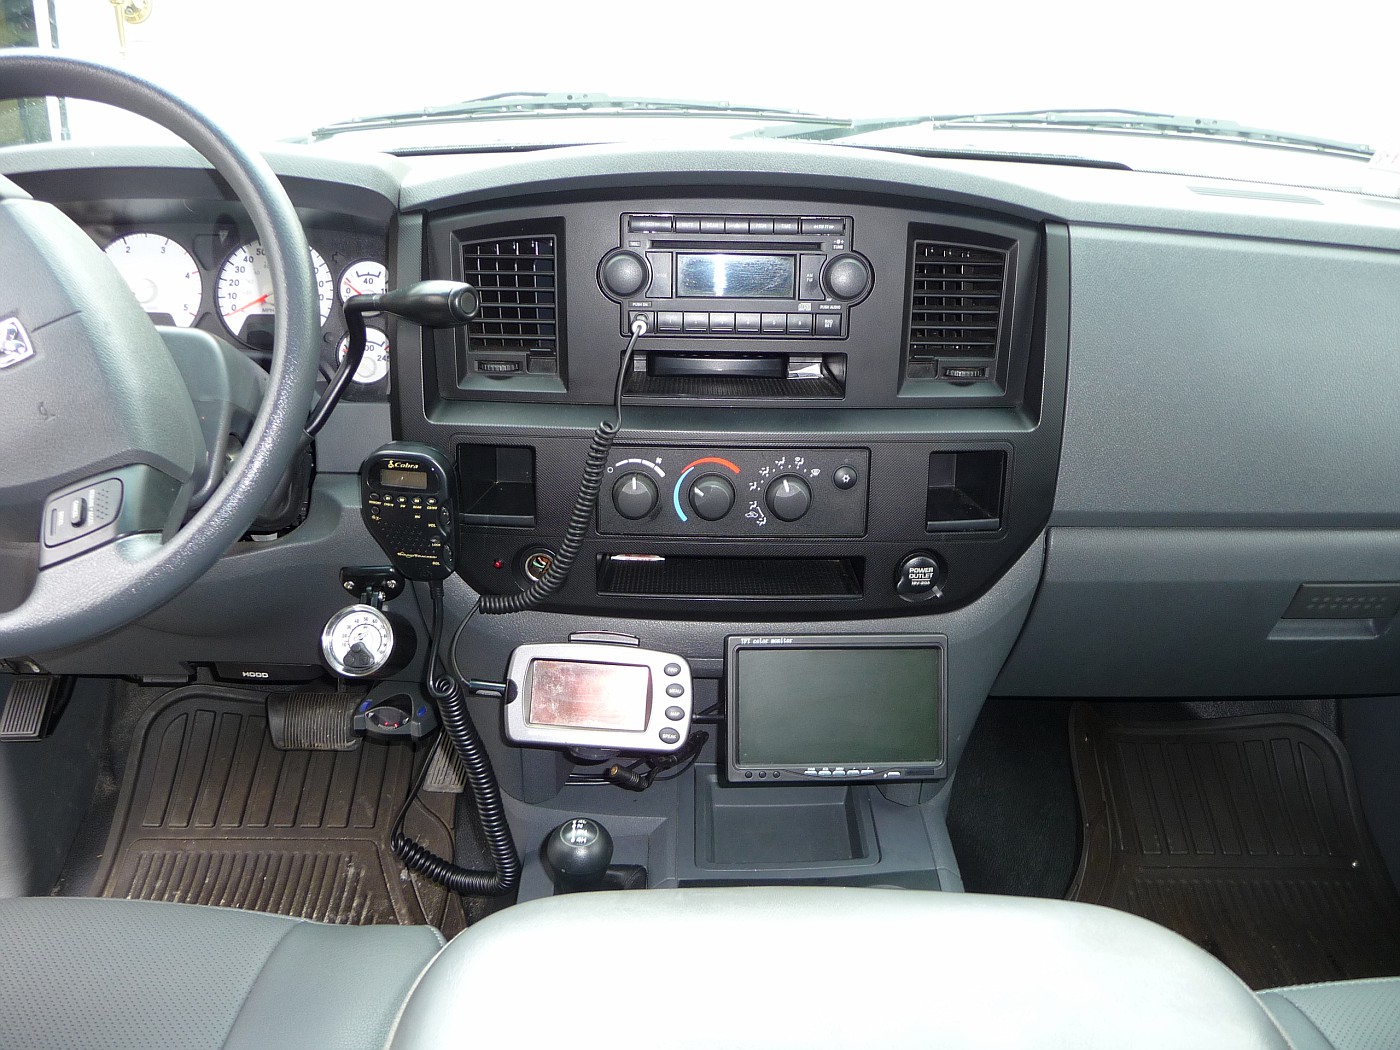 RV.Net Open Roads Forum: Truck Campers: CB Radio install in a 2500 Dodge